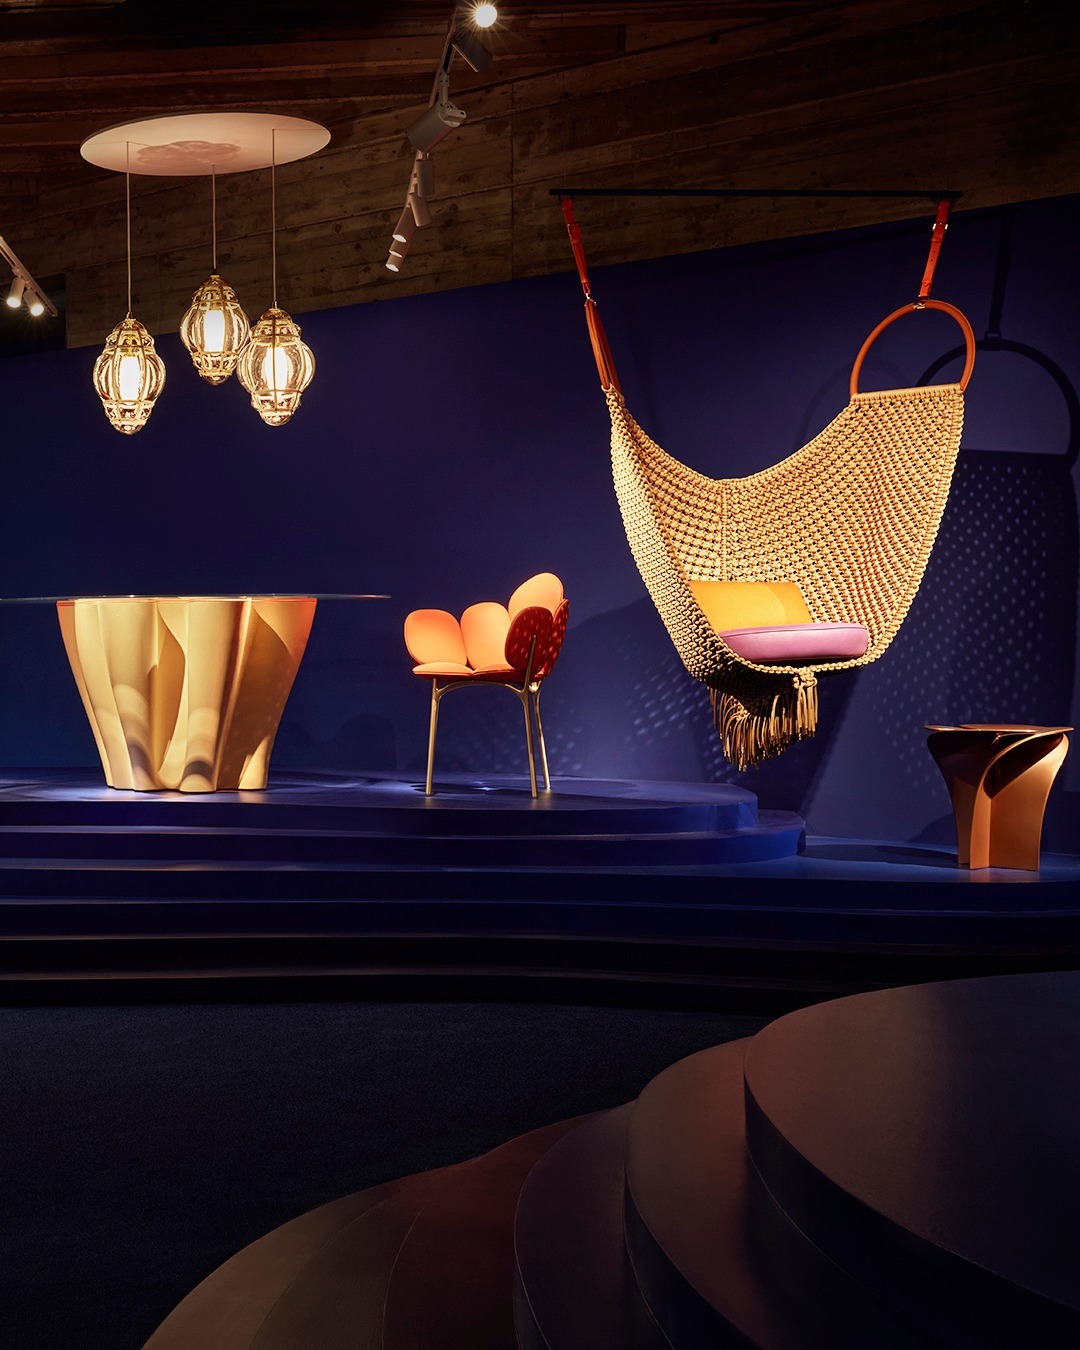 Louis Vuitton - Now Open: Mory Sacko at Louis Vuitton in